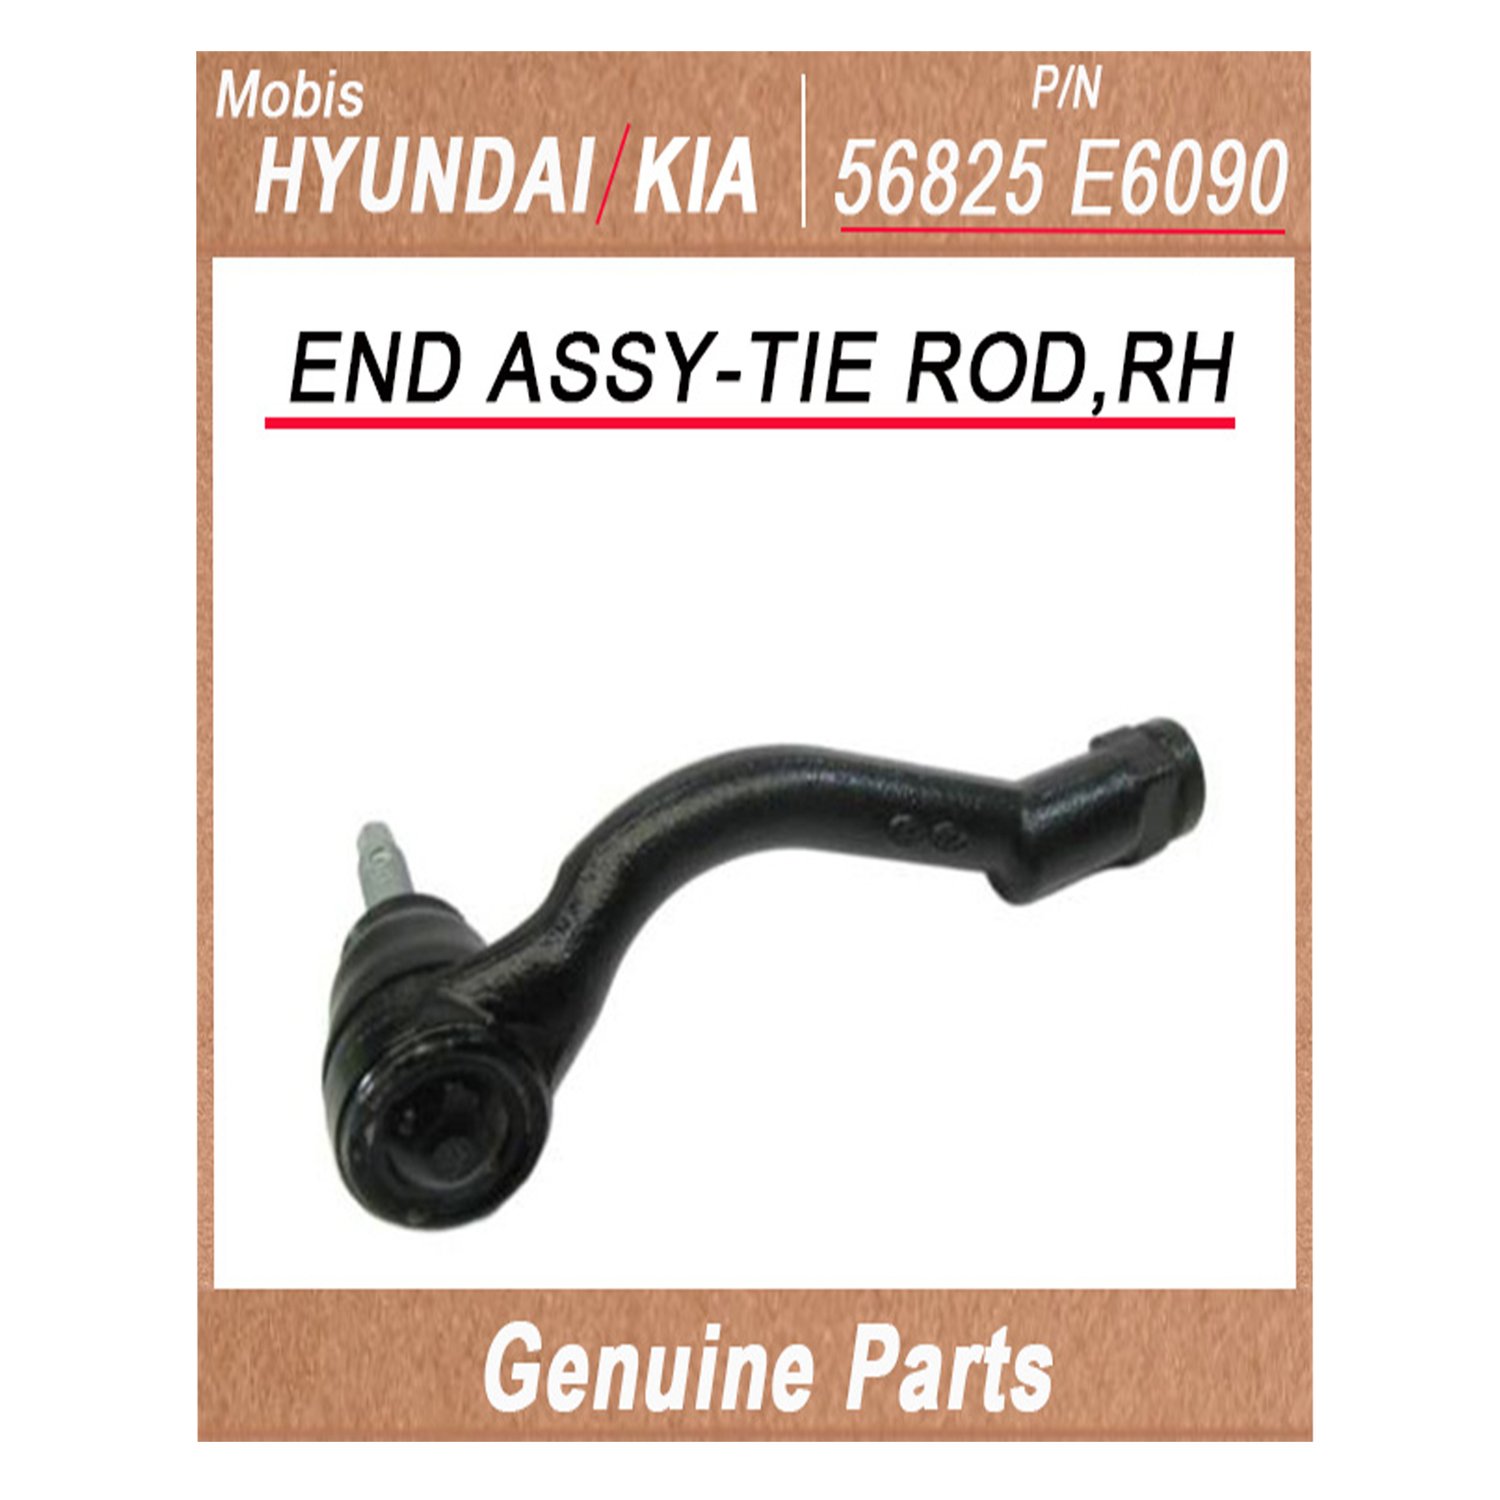 56825E6090 _ END ASSY_TIE ROD_RH _ Genuine Korean Automotive Spare Parts _ Hyundai Kia _Mobis_